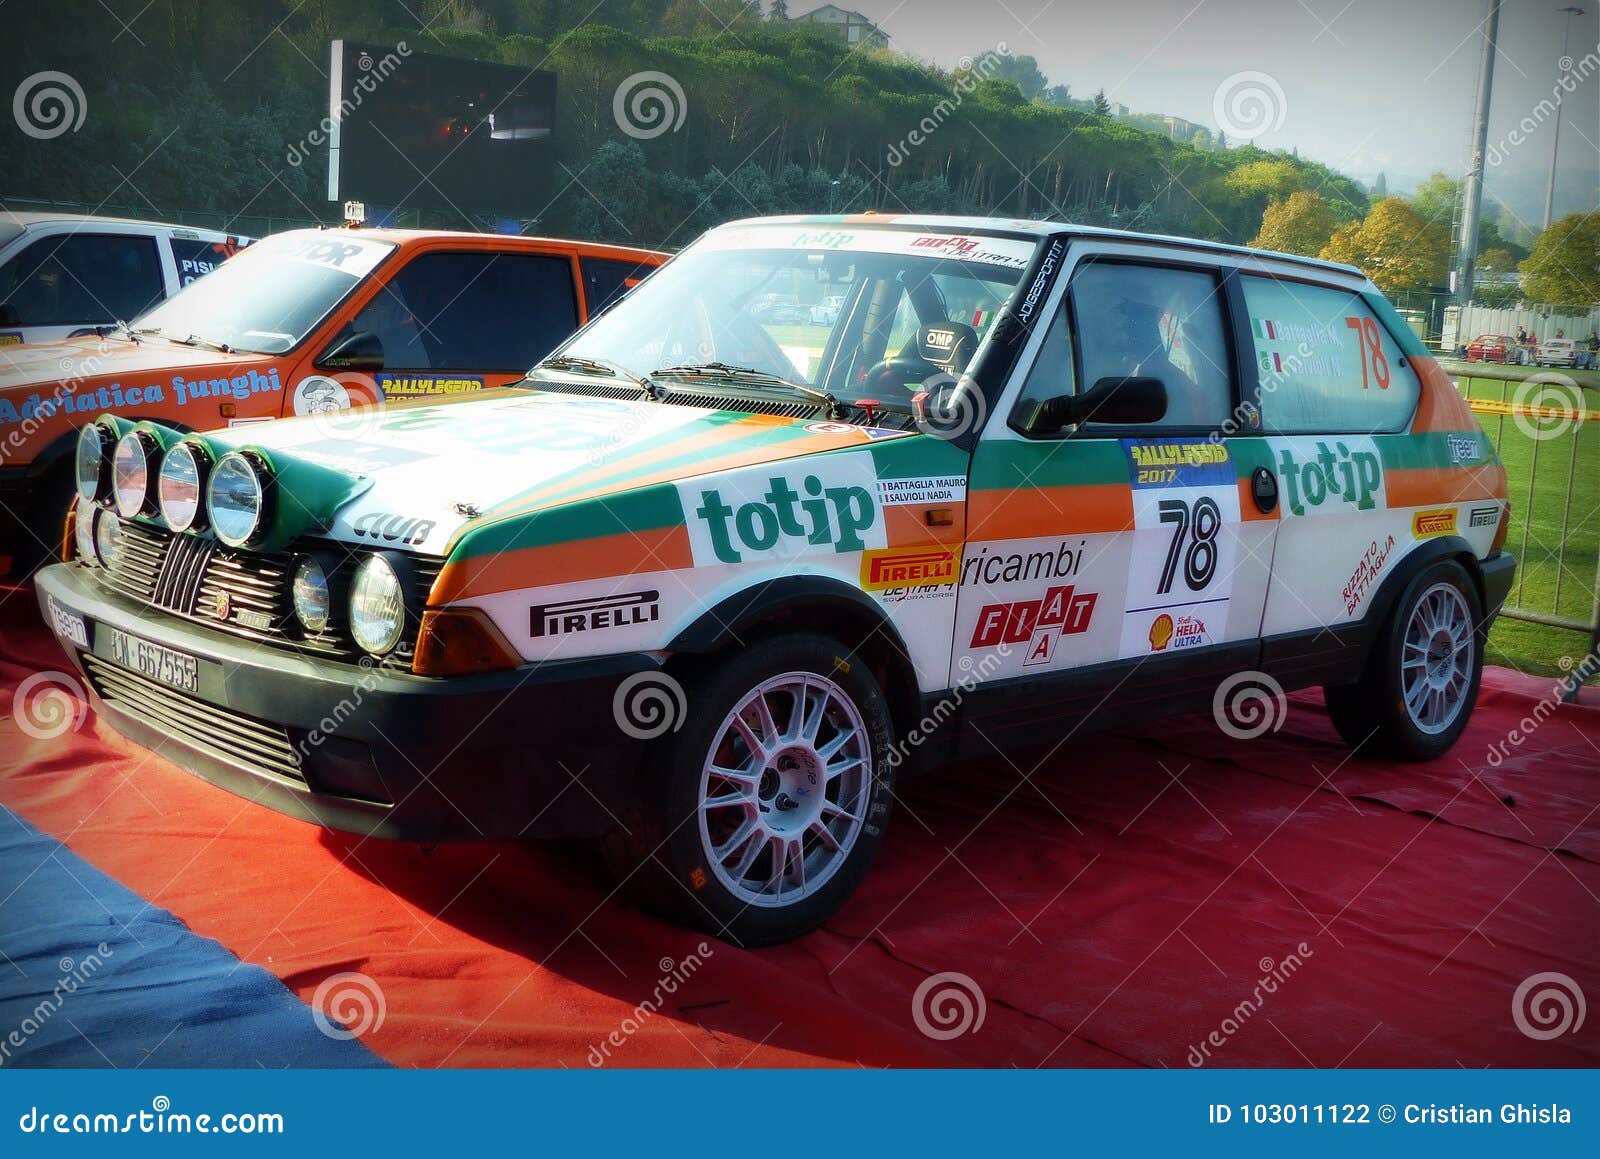 San Marino 21 October 17 Fiat Ritmo Abarth 130 At Rally The Legend Editorial Photography Image Of Citroen 02